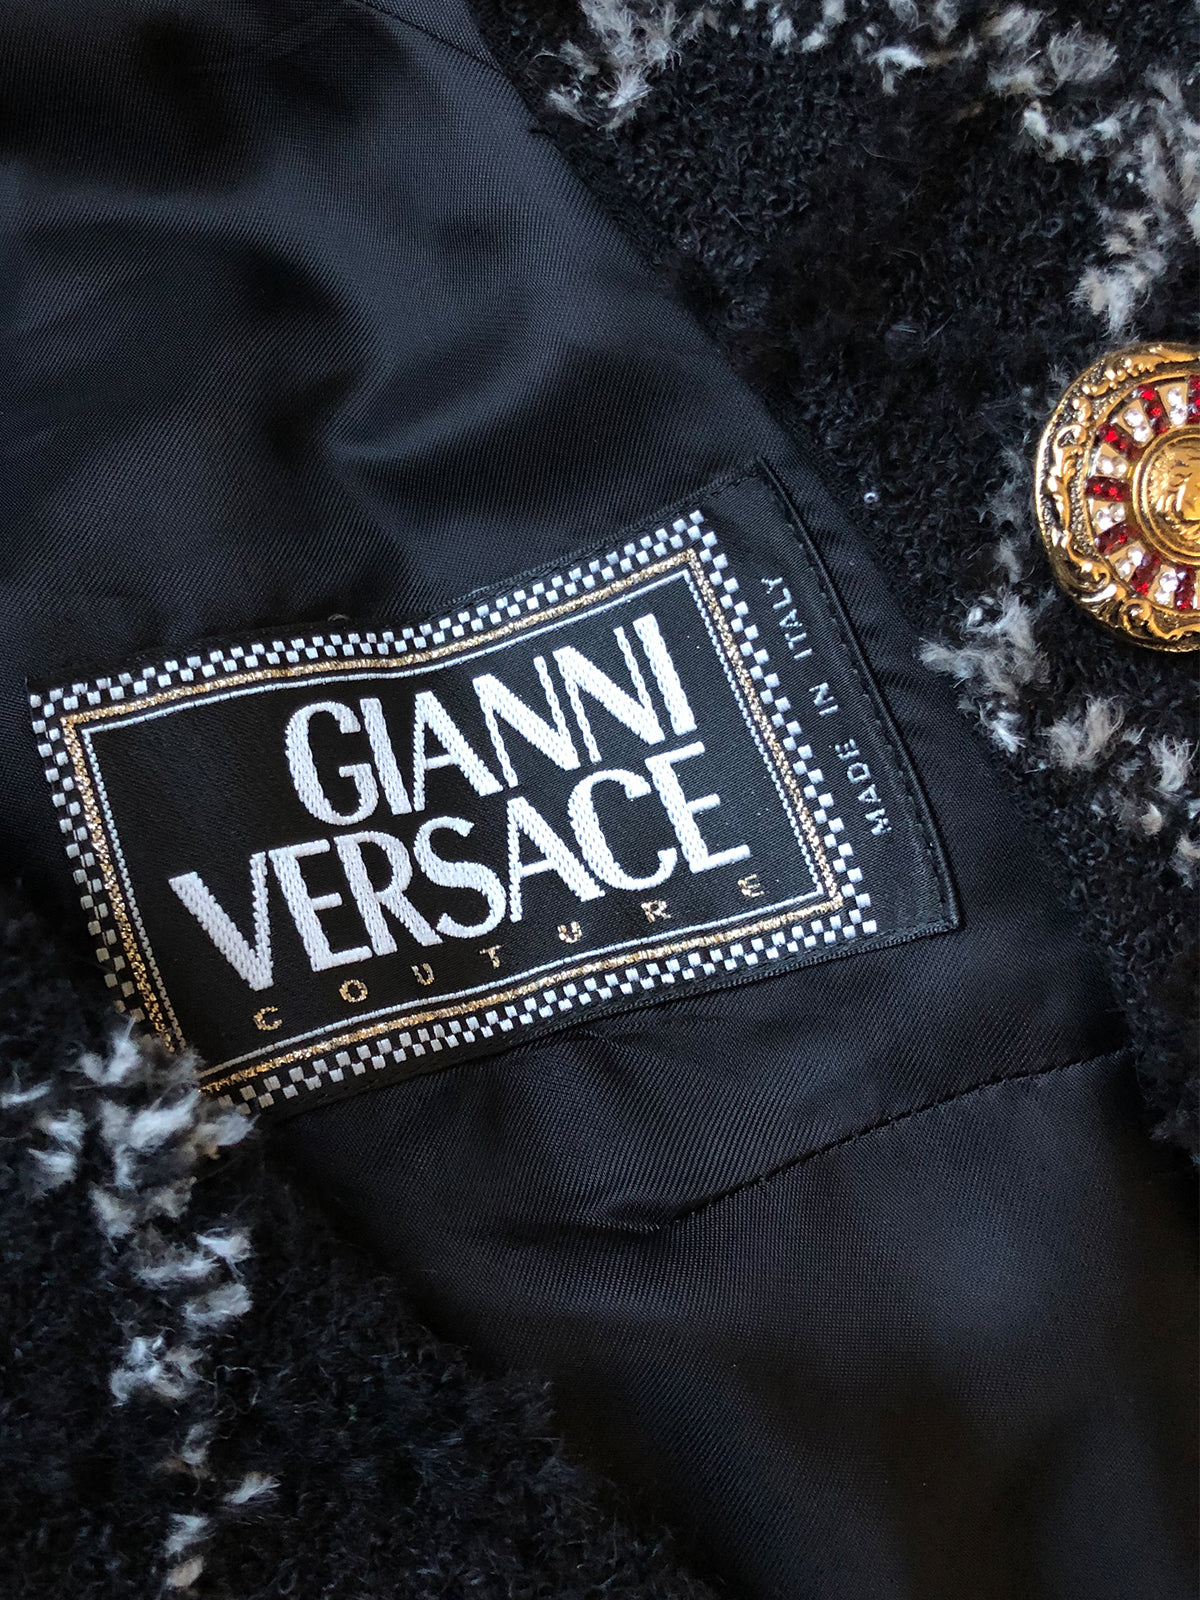 GIANNI VERSACE Couture Fall 1993 Vintage Bouclé Coat w/ Jeweled Medusa Buttons